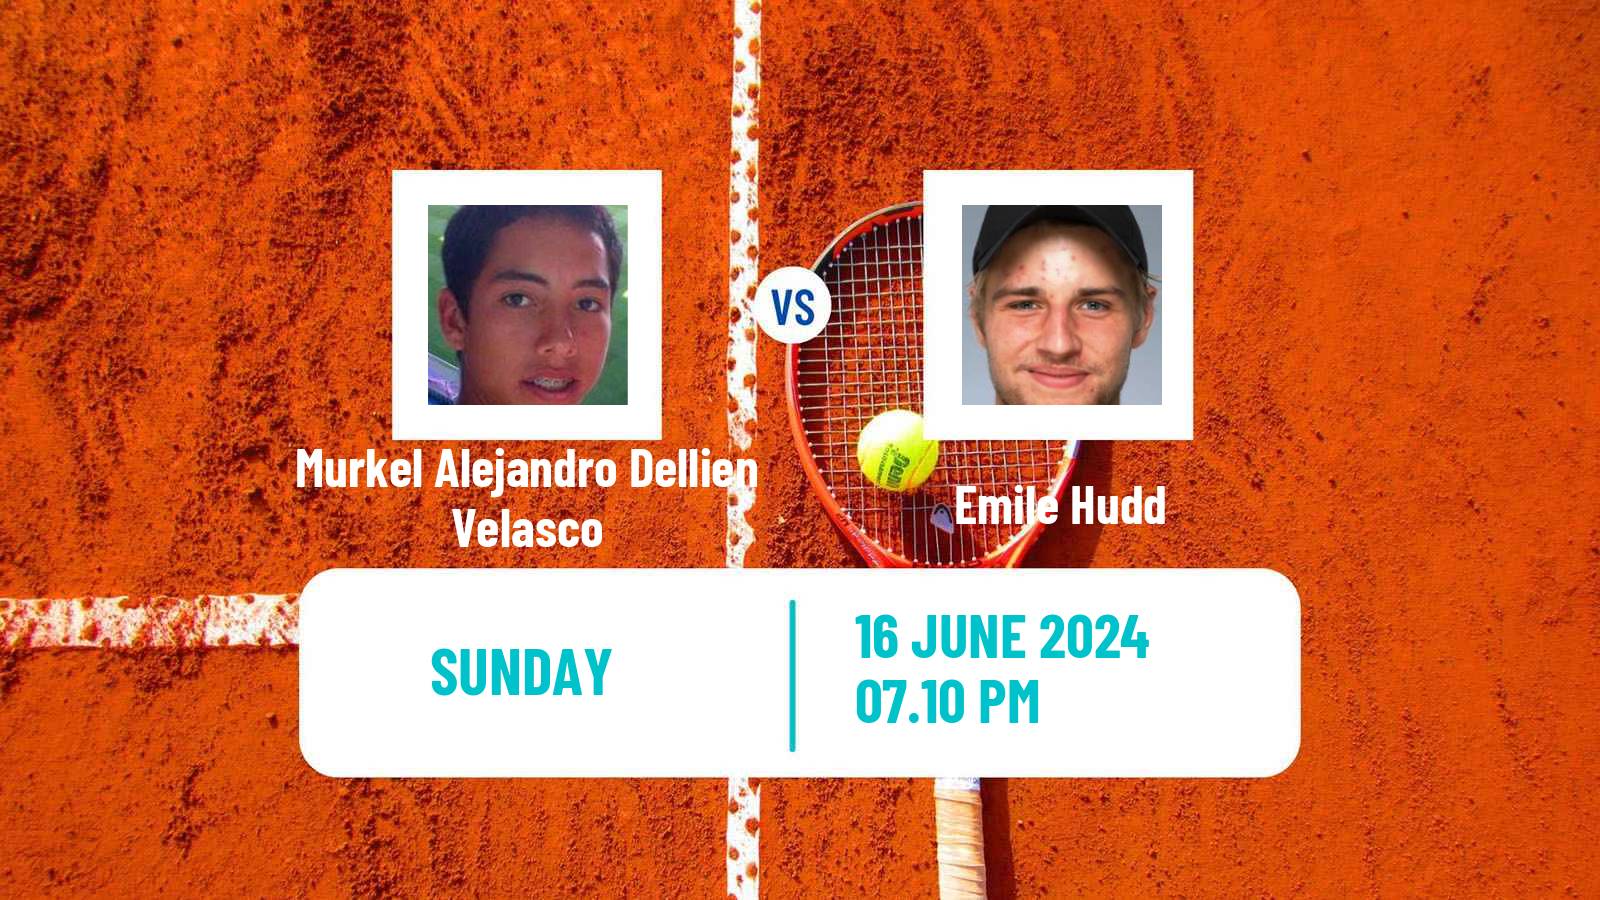 Tennis Santa Cruz 2 Challenger Men Murkel Alejandro Dellien Velasco - Emile Hudd